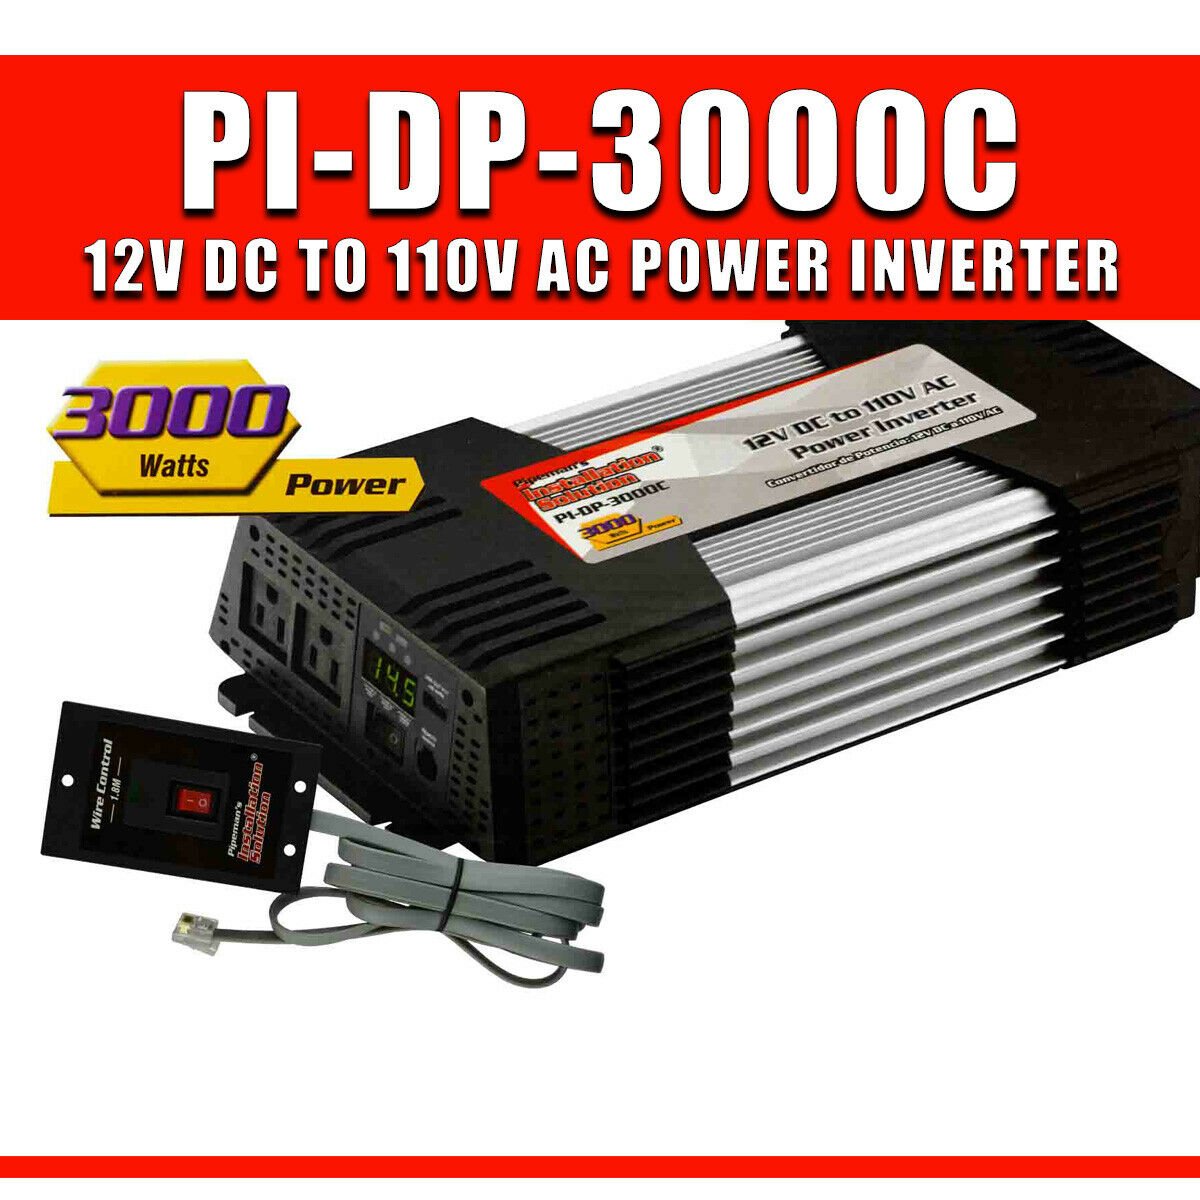 Power Inverter 3000 Watts NA PI-DP-3000C